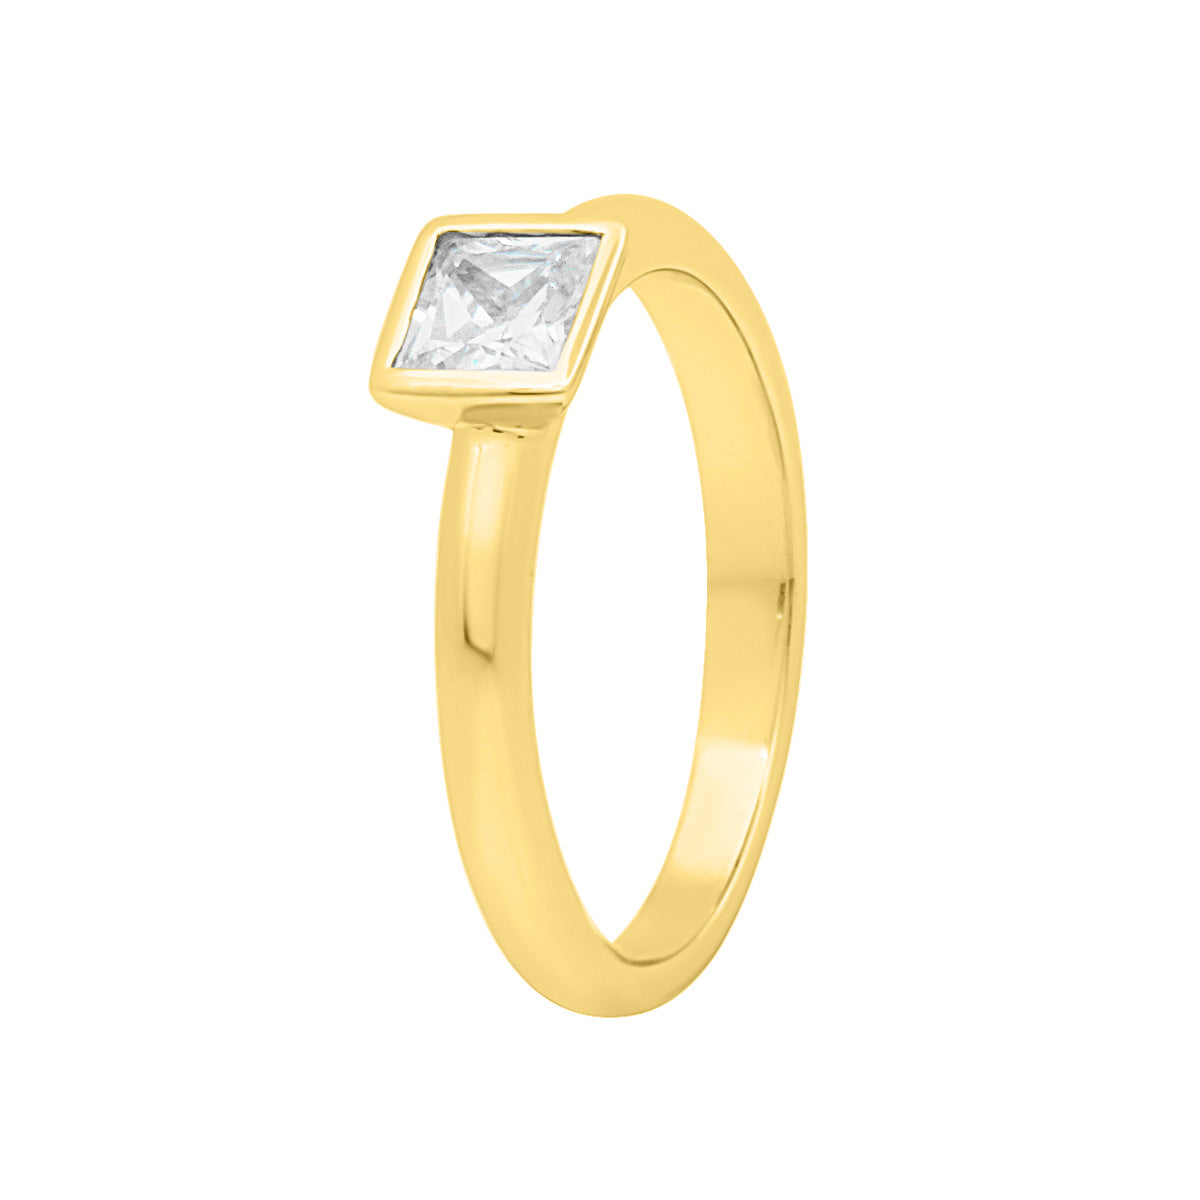 Bezel Set Princess Cut Engagement Ring In 18kt Yellow Gold